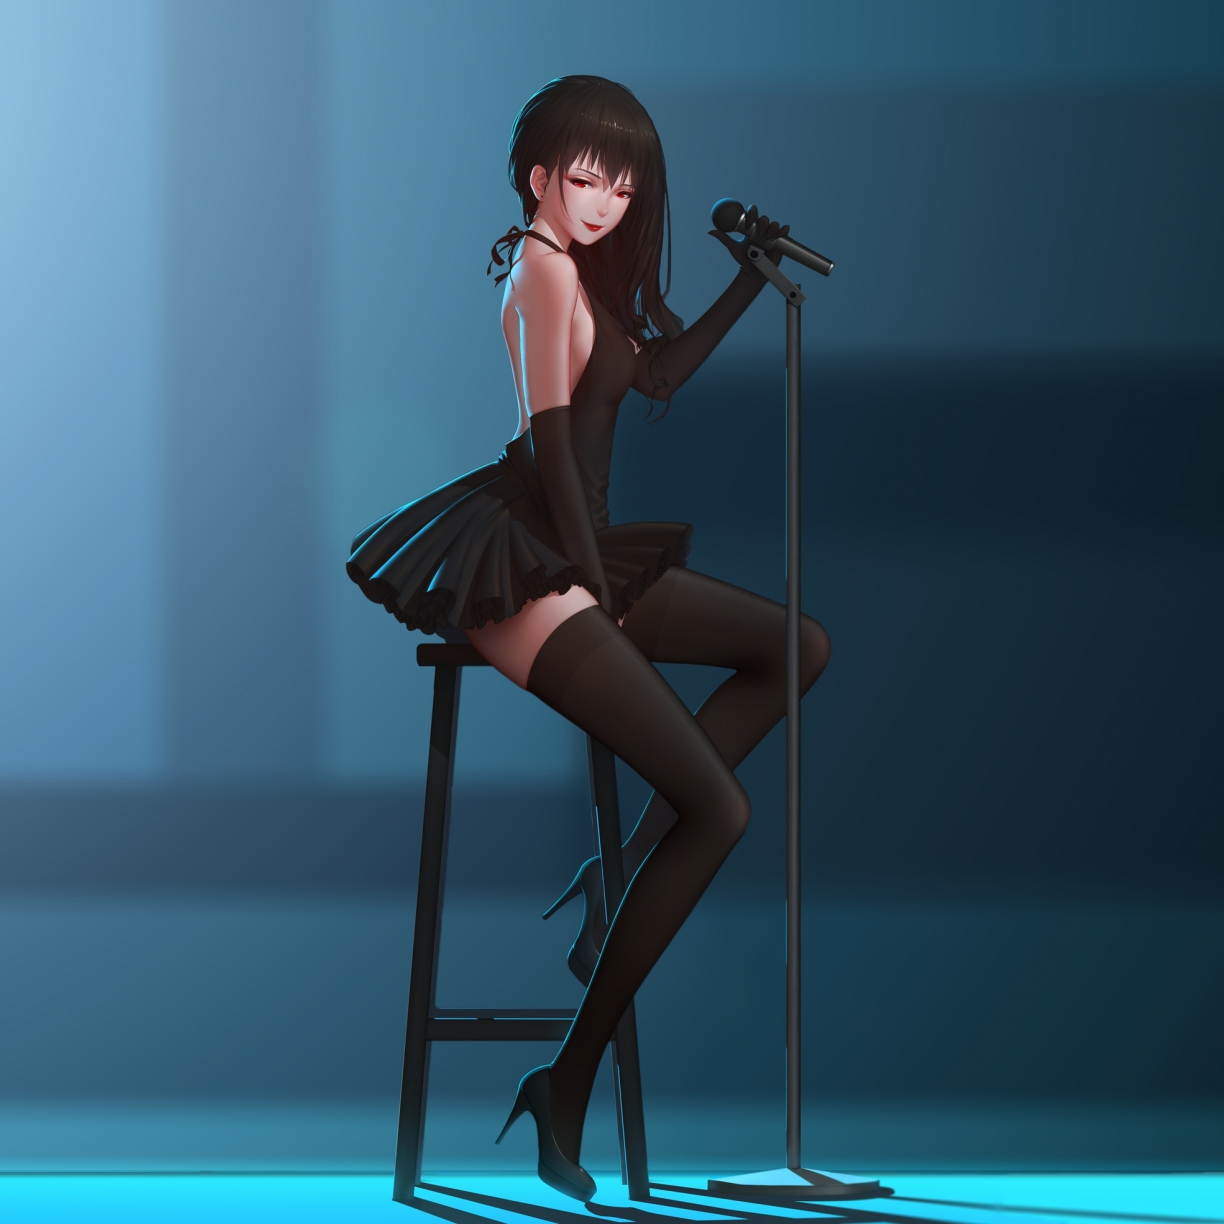 Download wallpaper 950x1534 cute, anime girl, black dress